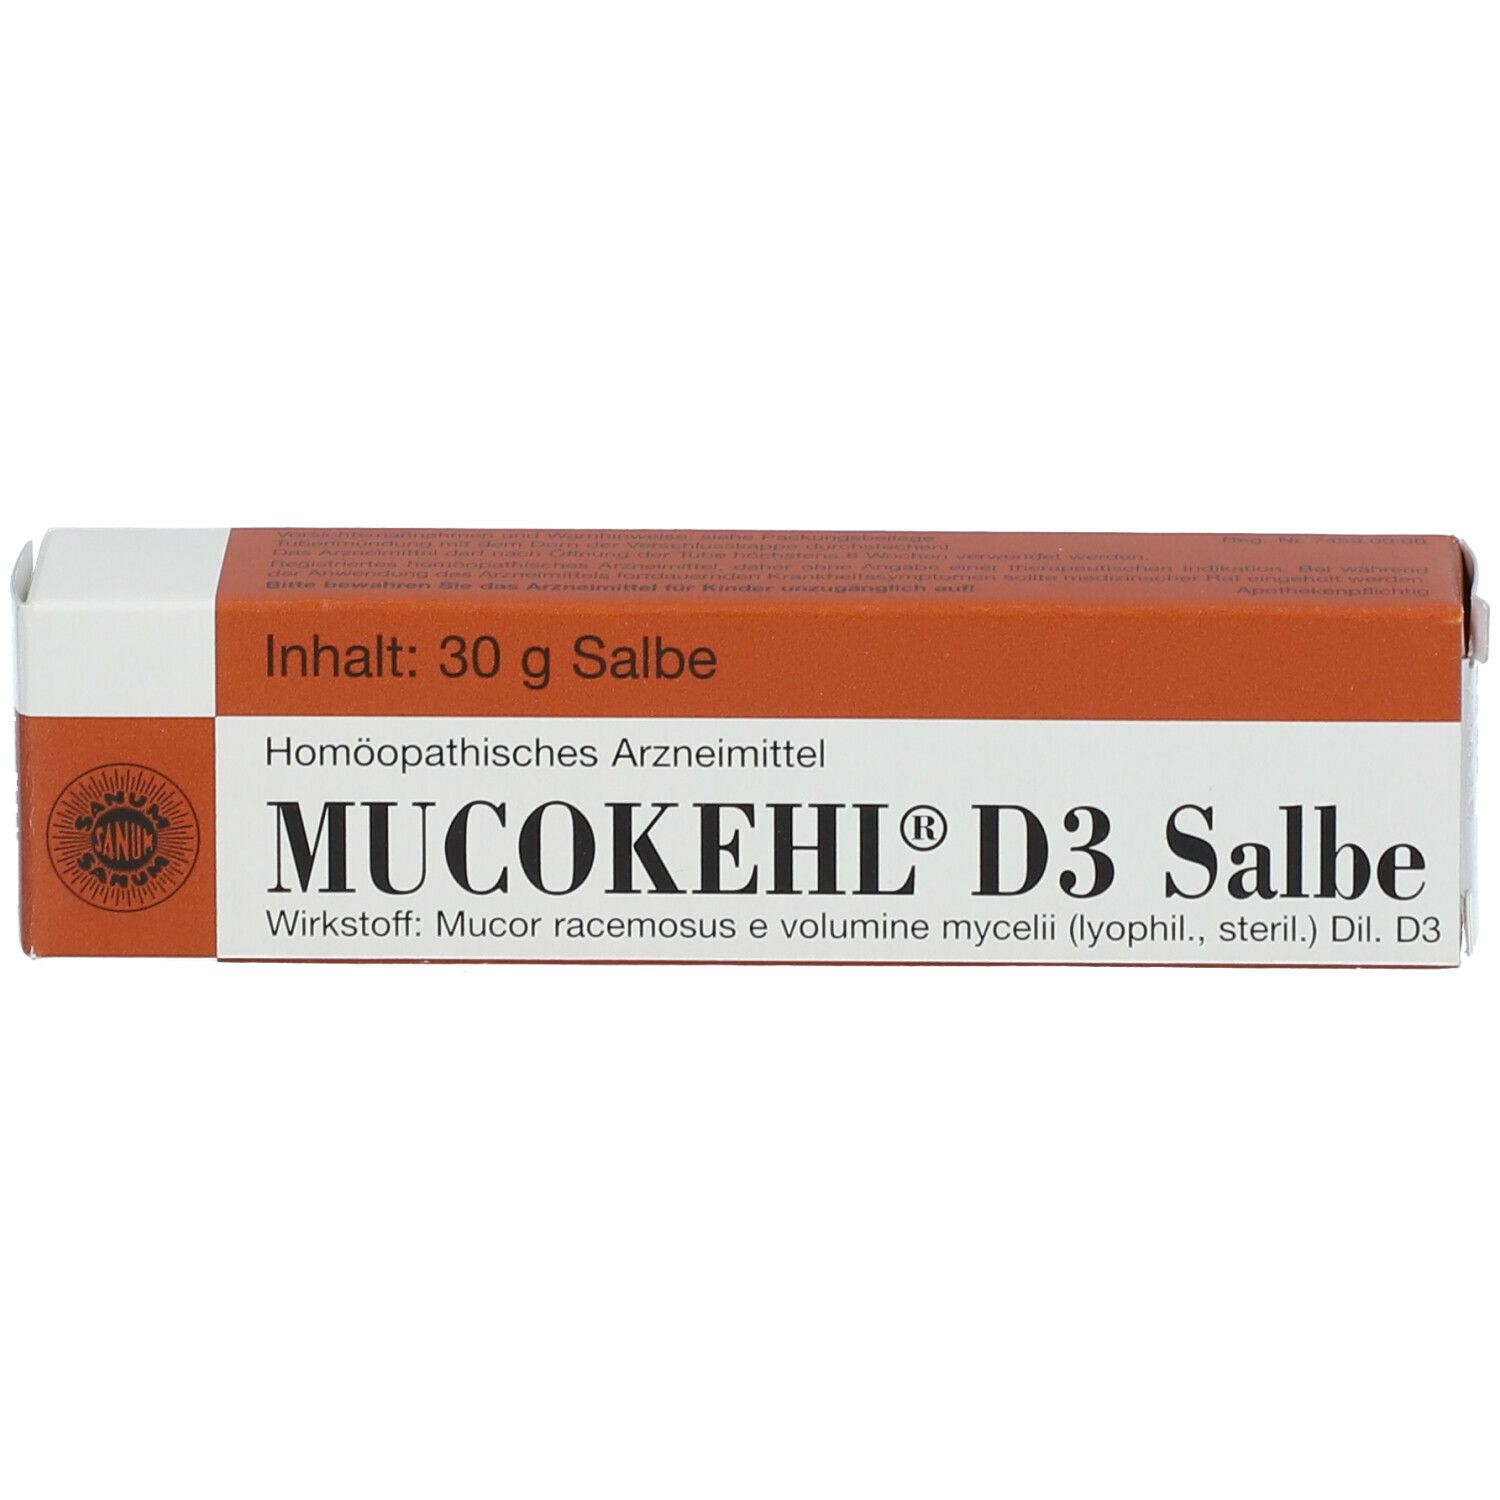 Mucokehl® D3 Salbe